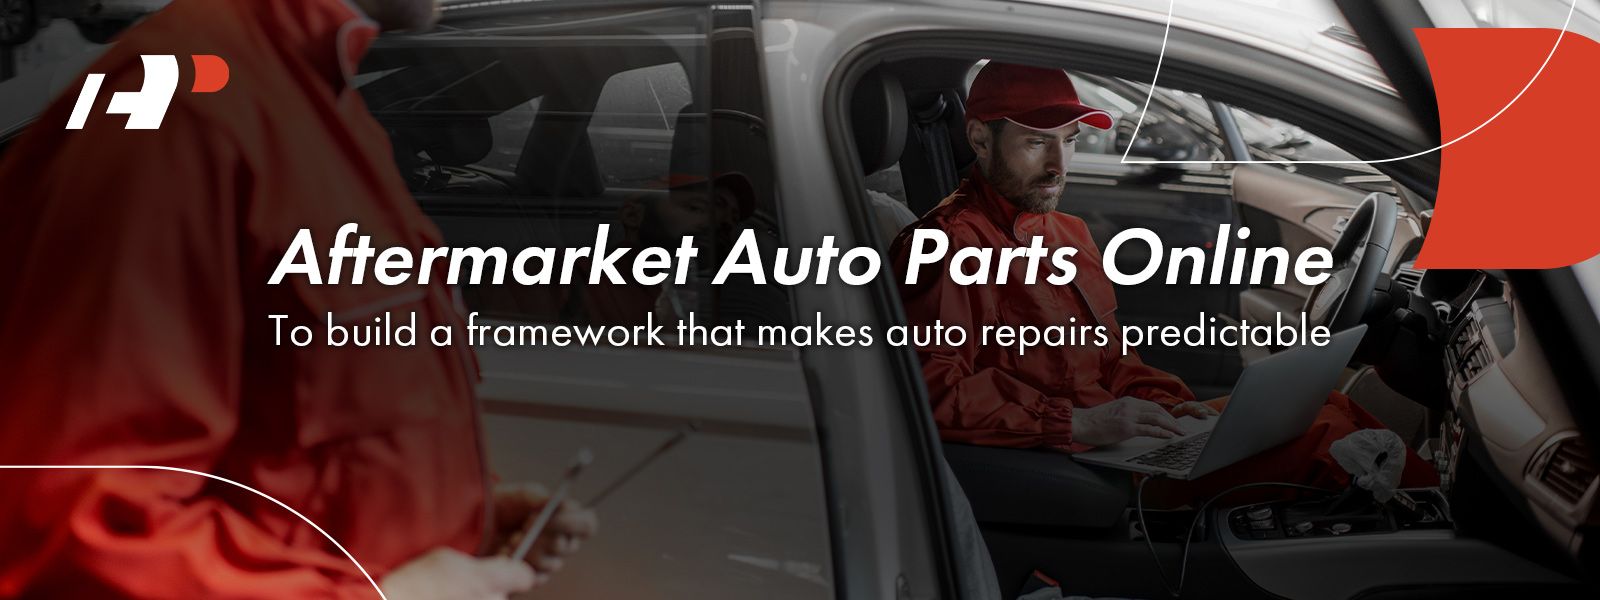 Buy aftermarket auto parts online at A-Premium.com